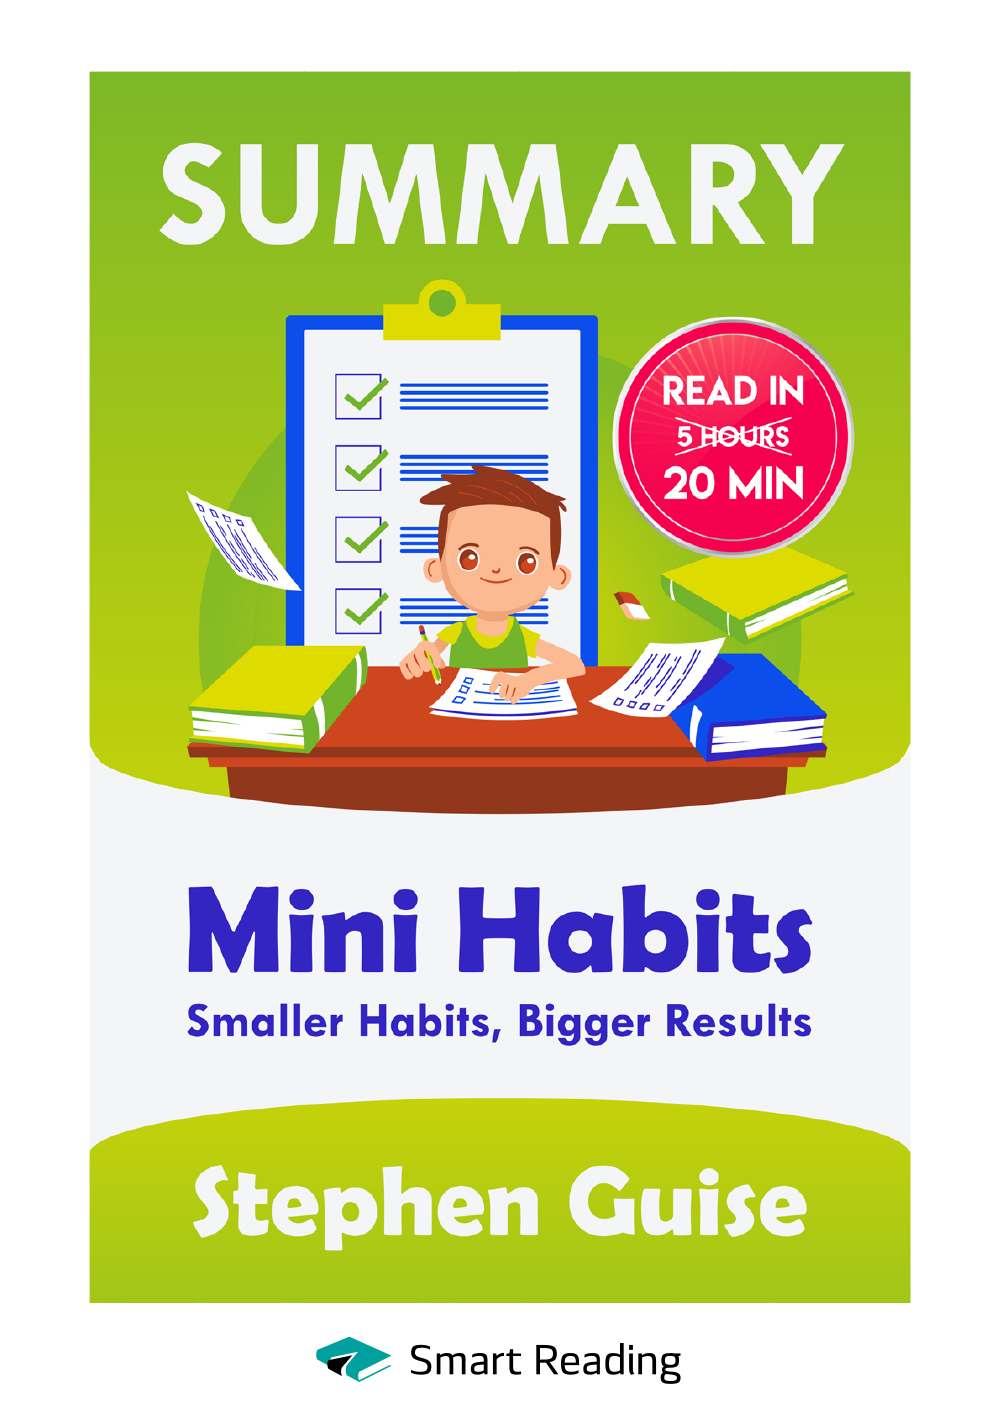 Summary: Mini Habits. Smaller Habits, Bigger Results. Stephen Guise